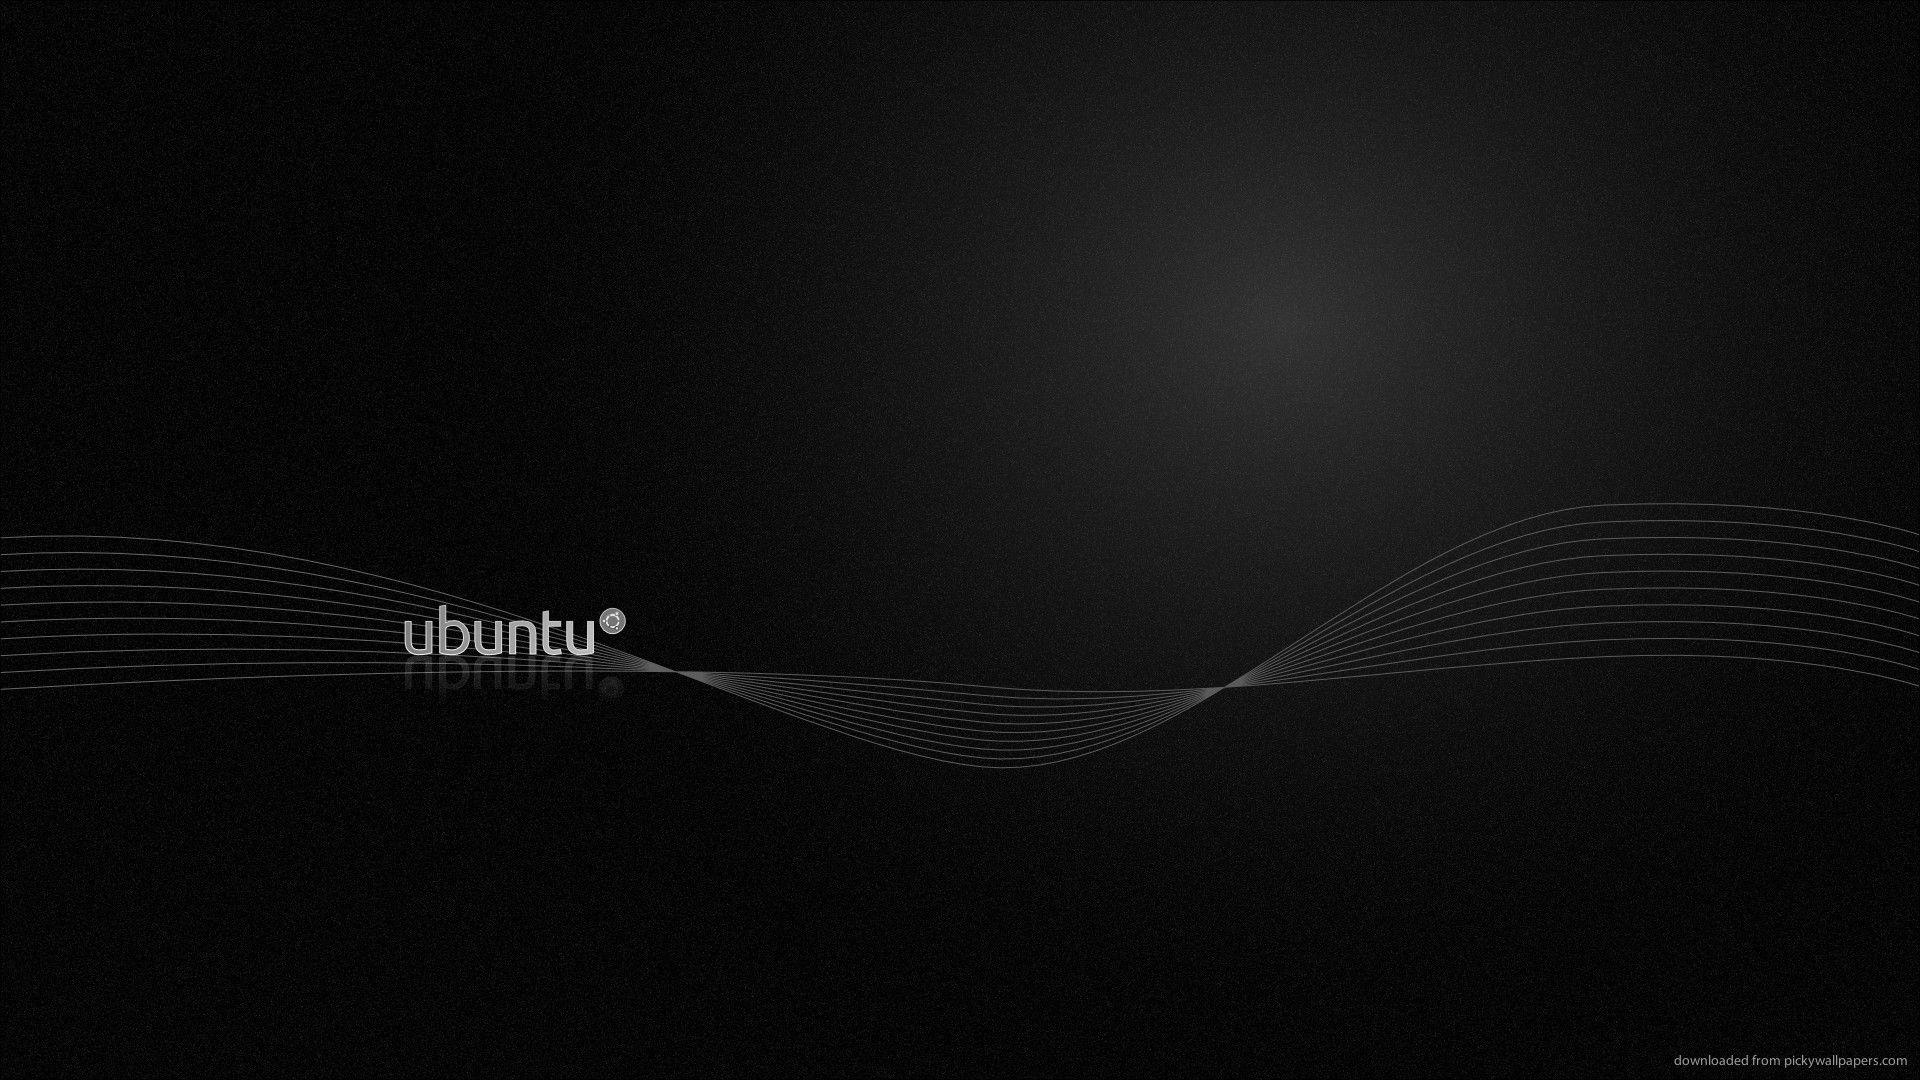 Ubuntu Black Wallpaper For PSP